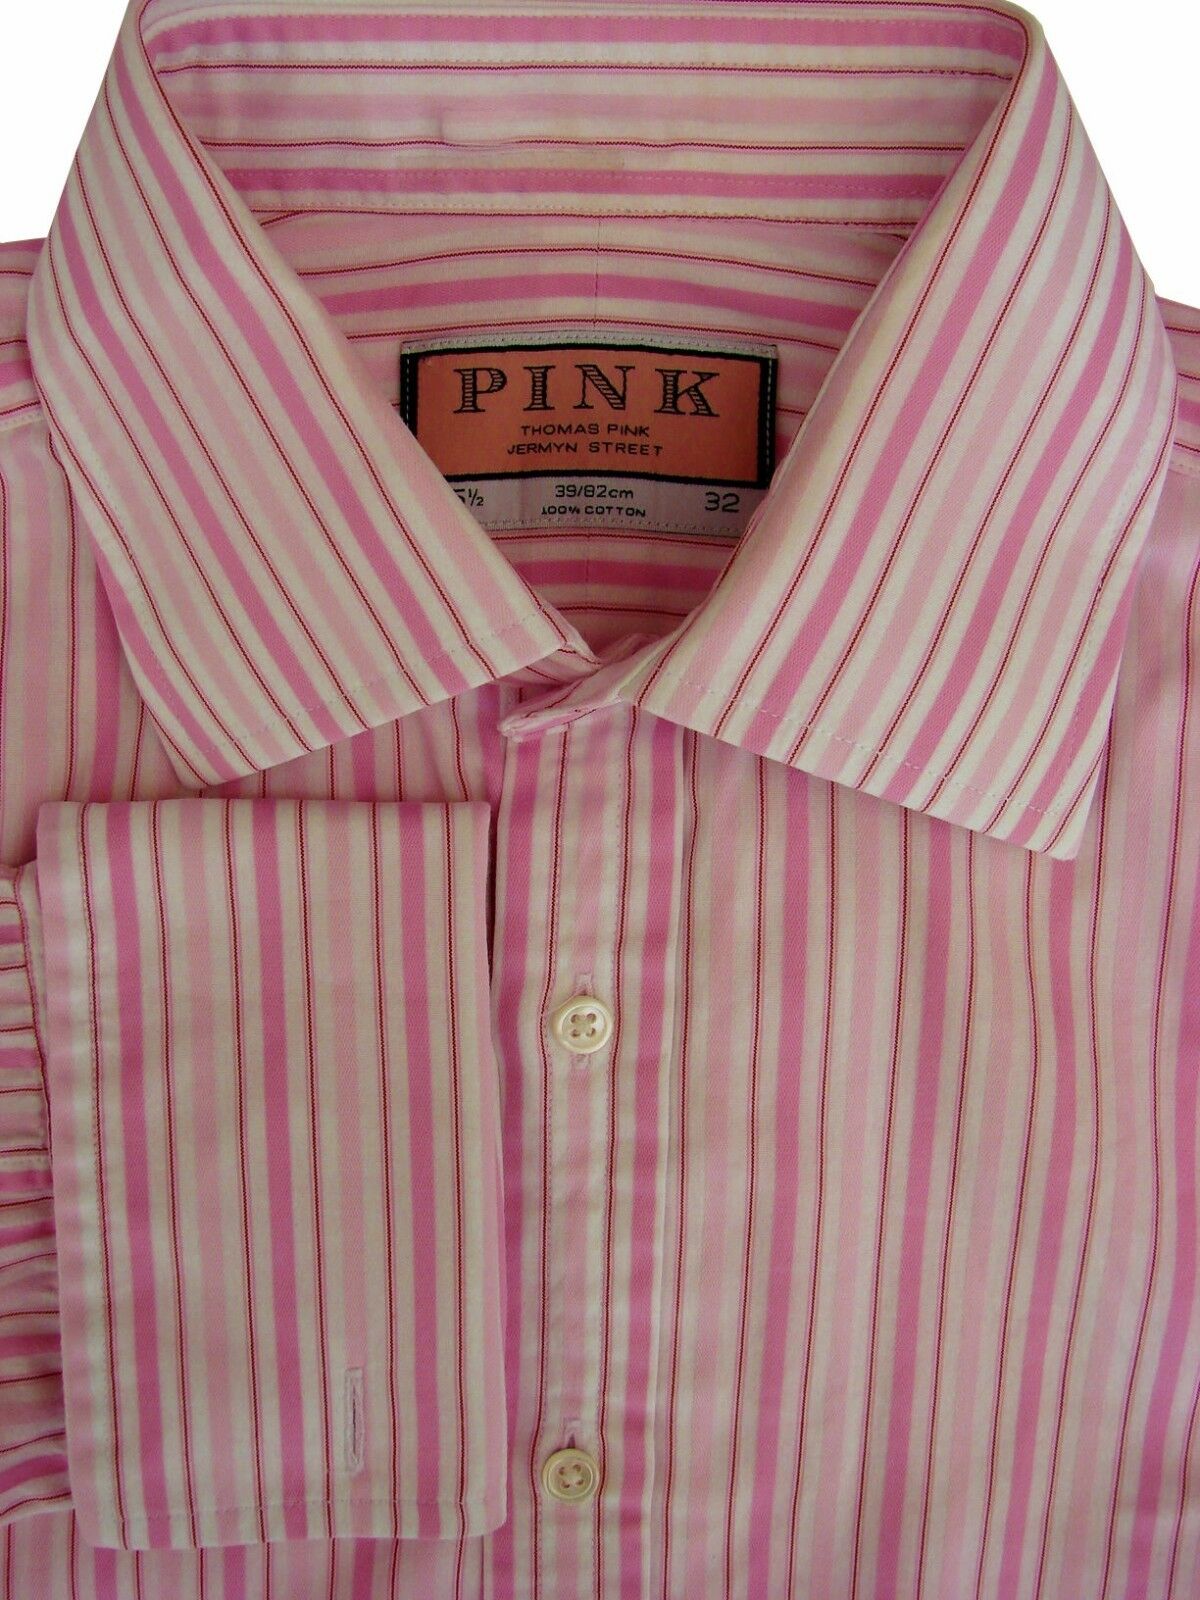 thomas pink shirts